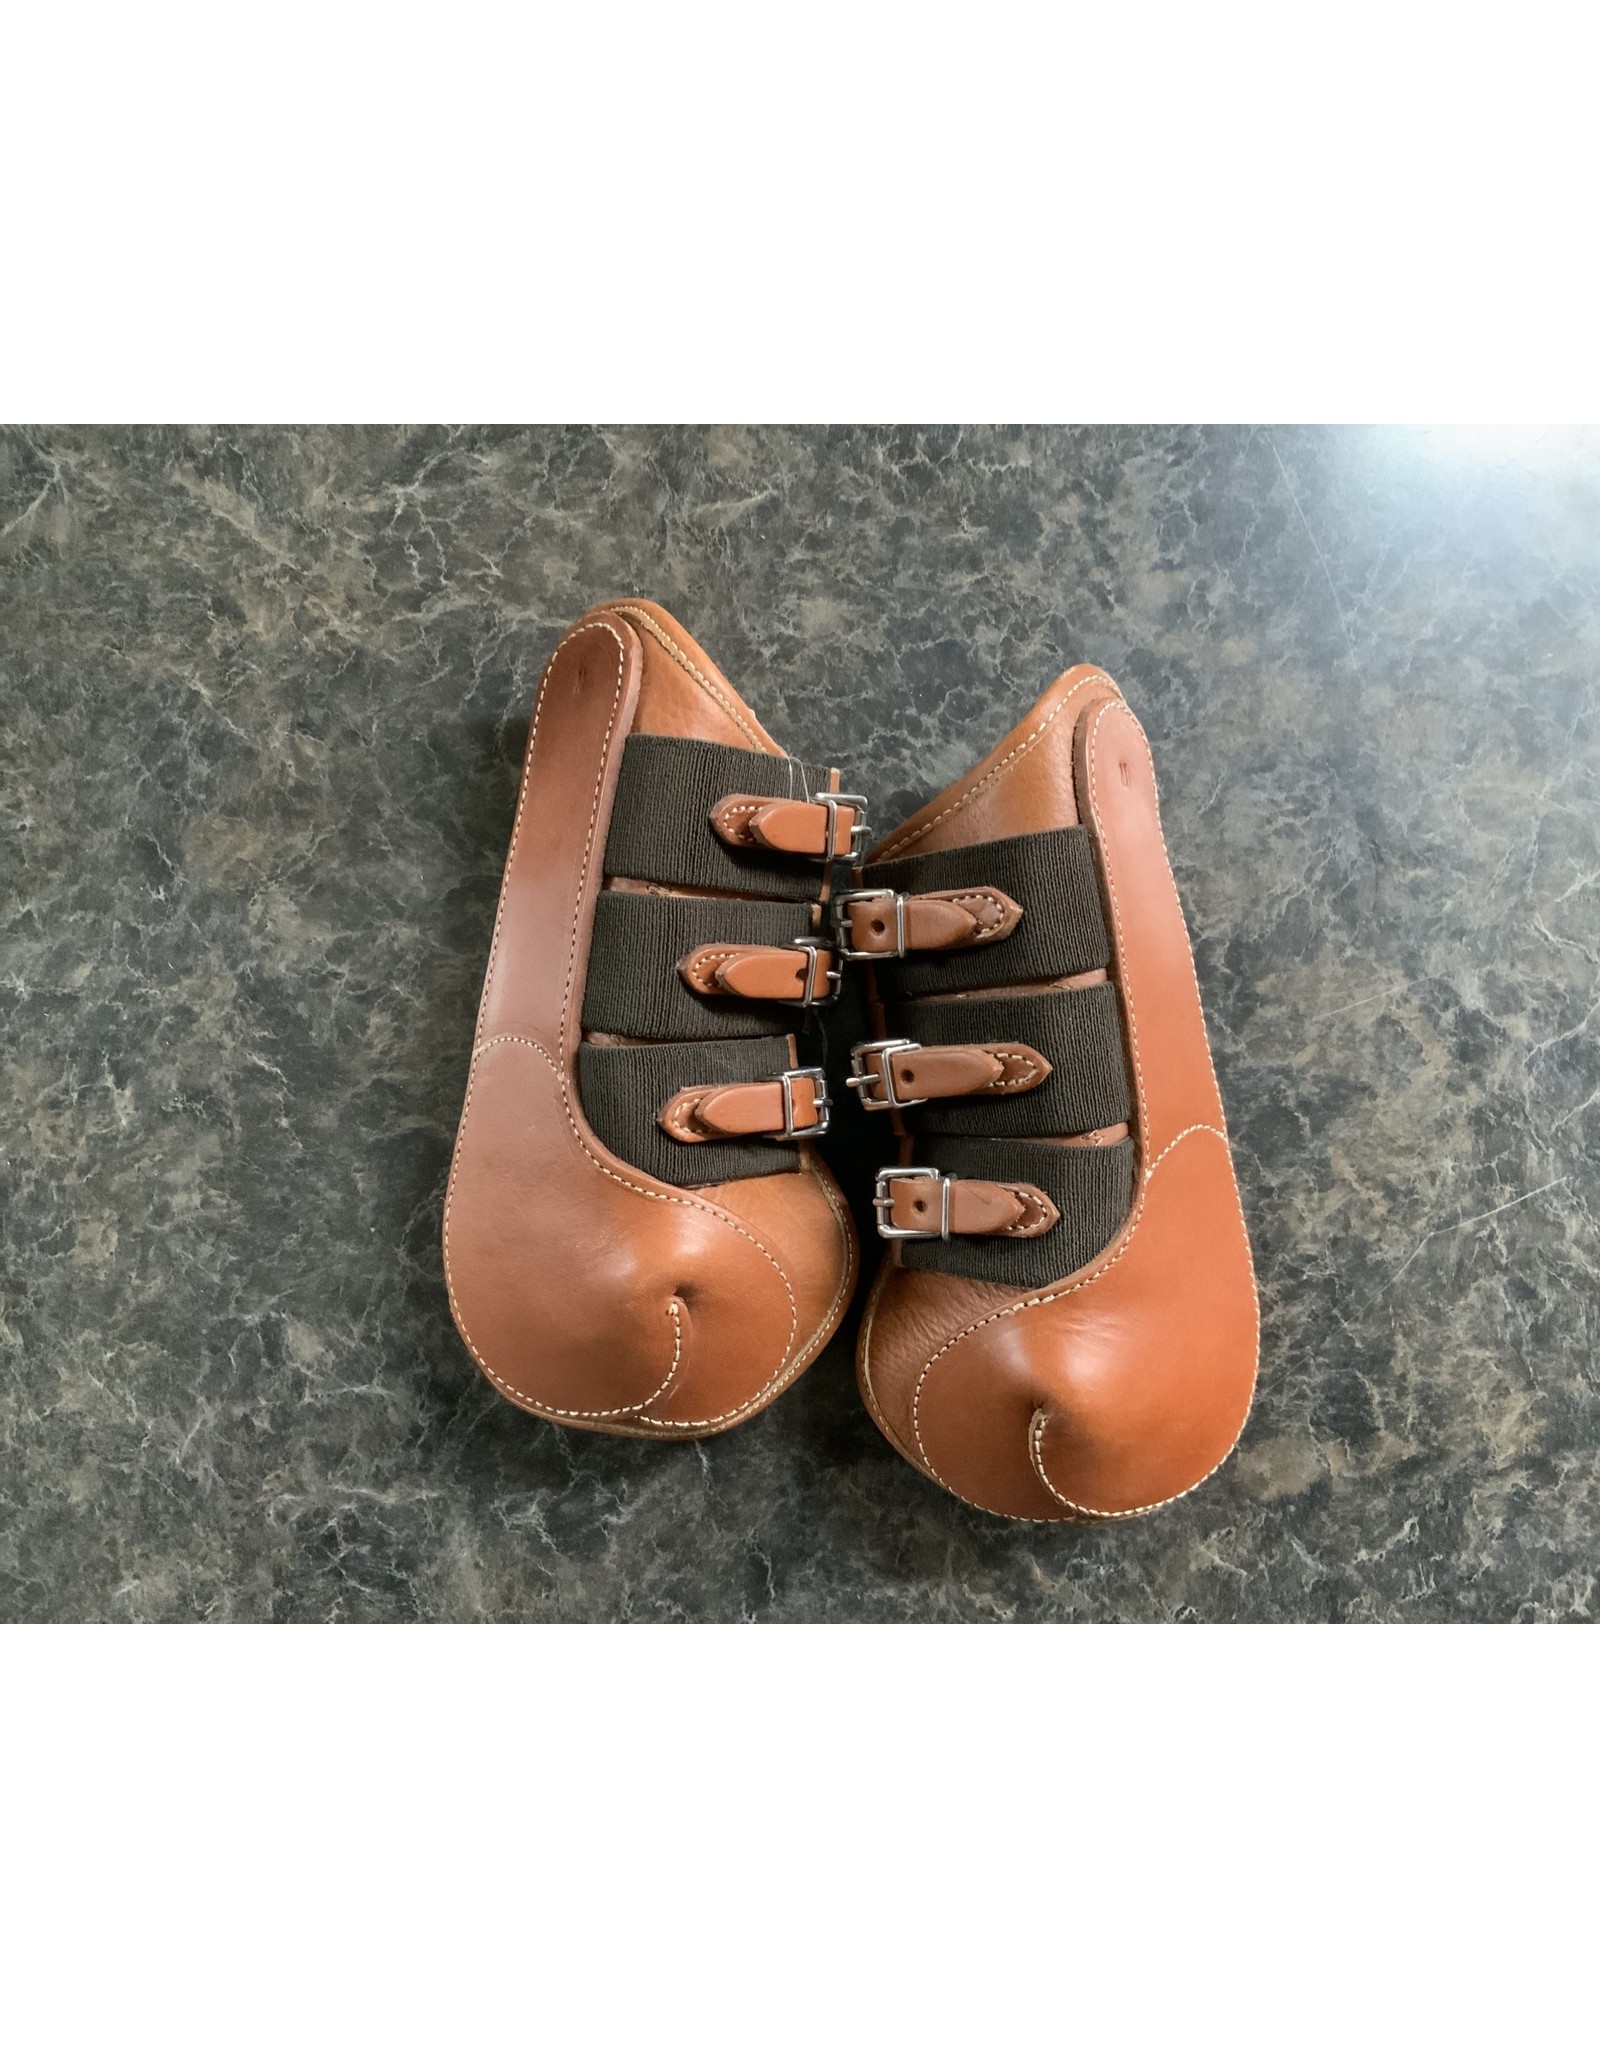 Full Leather Splint Boot with Metal Buckle Closures - Medium - SP190MC10